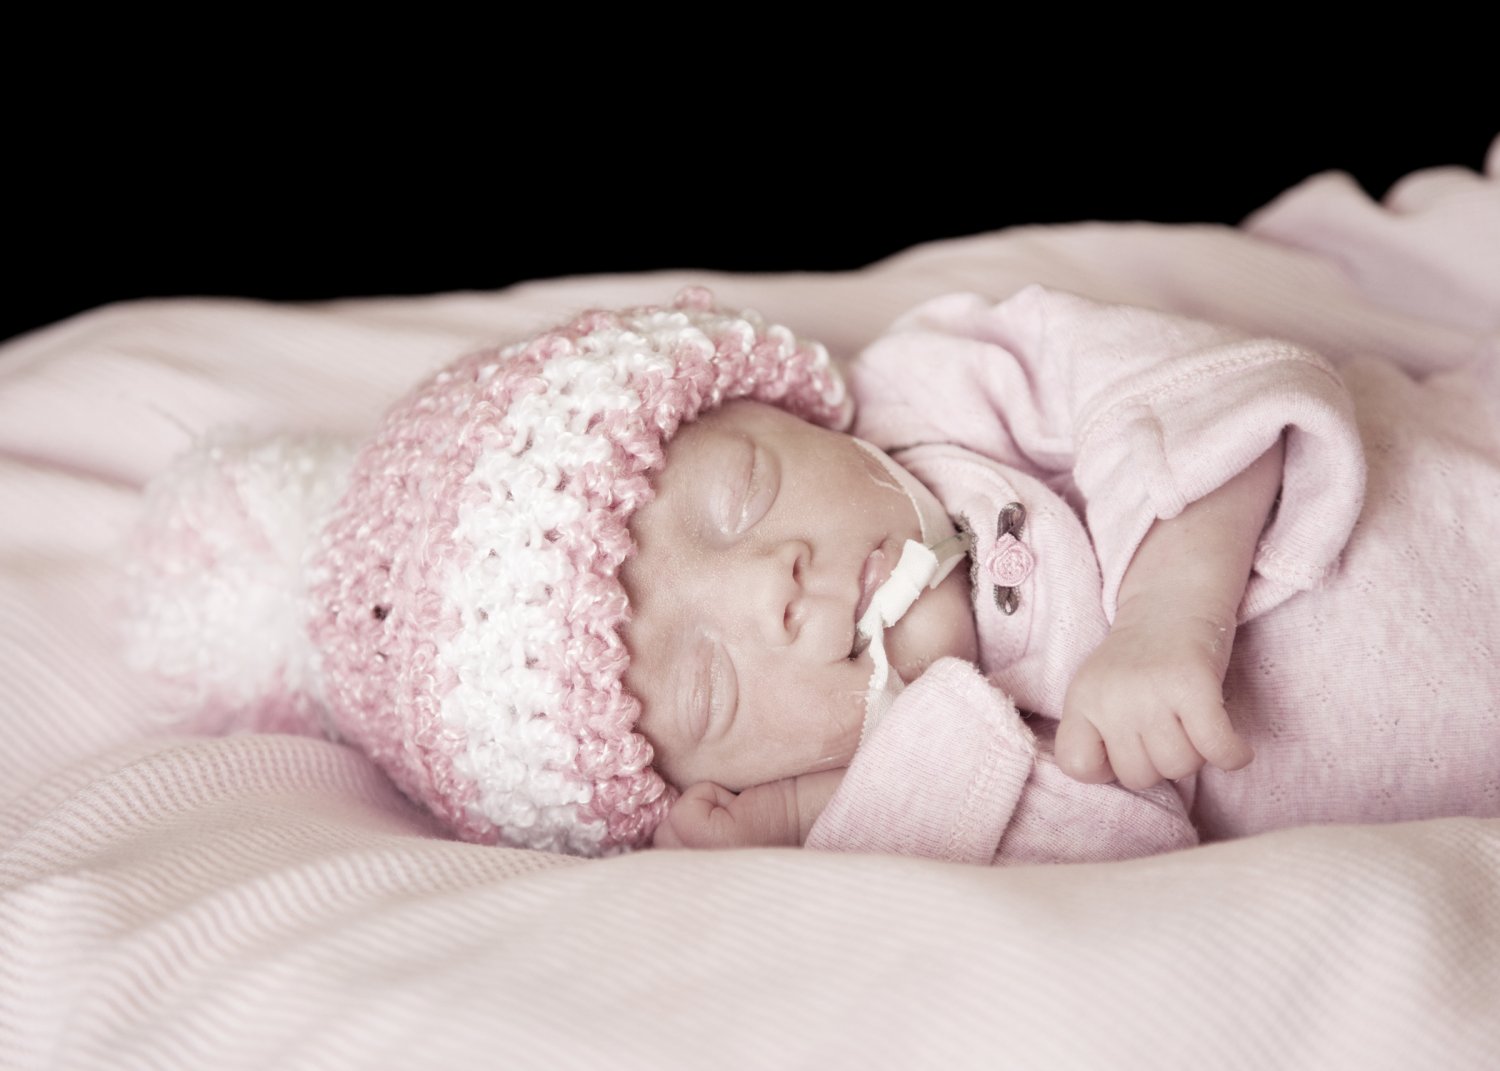 Premature baby wearing pink hat and onesie